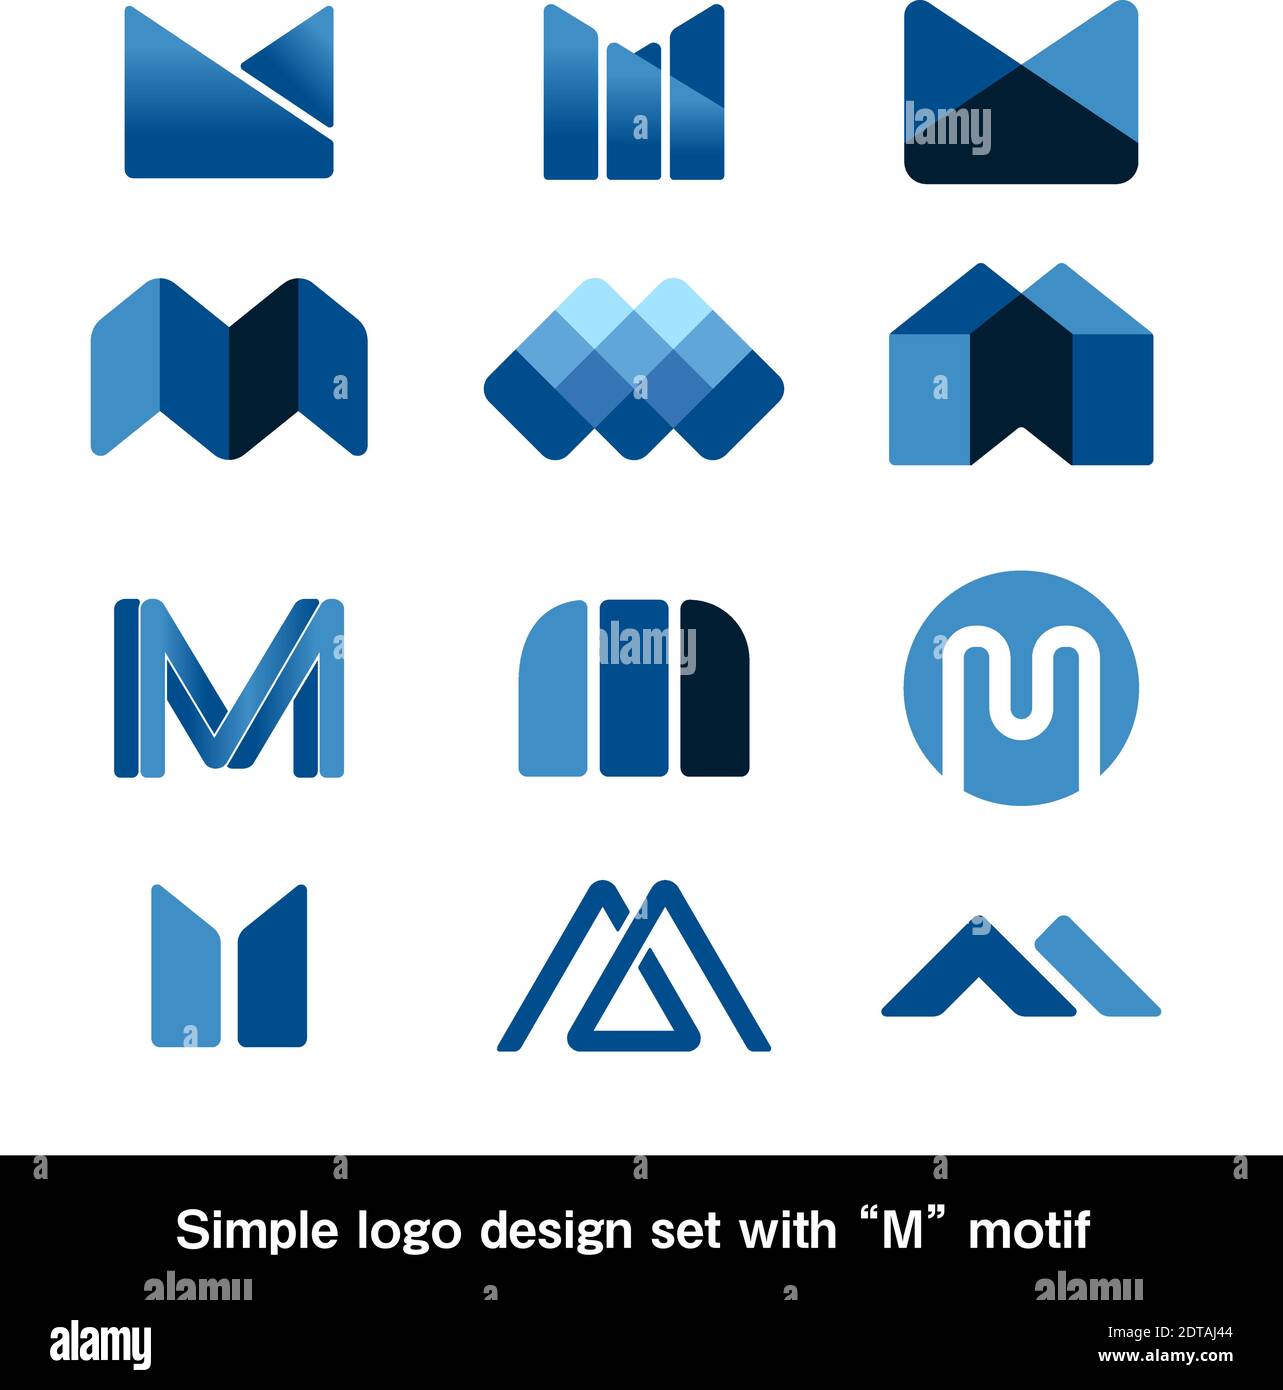 Simple logo design set with 'M' motif. Vector illustration. Stock Vector